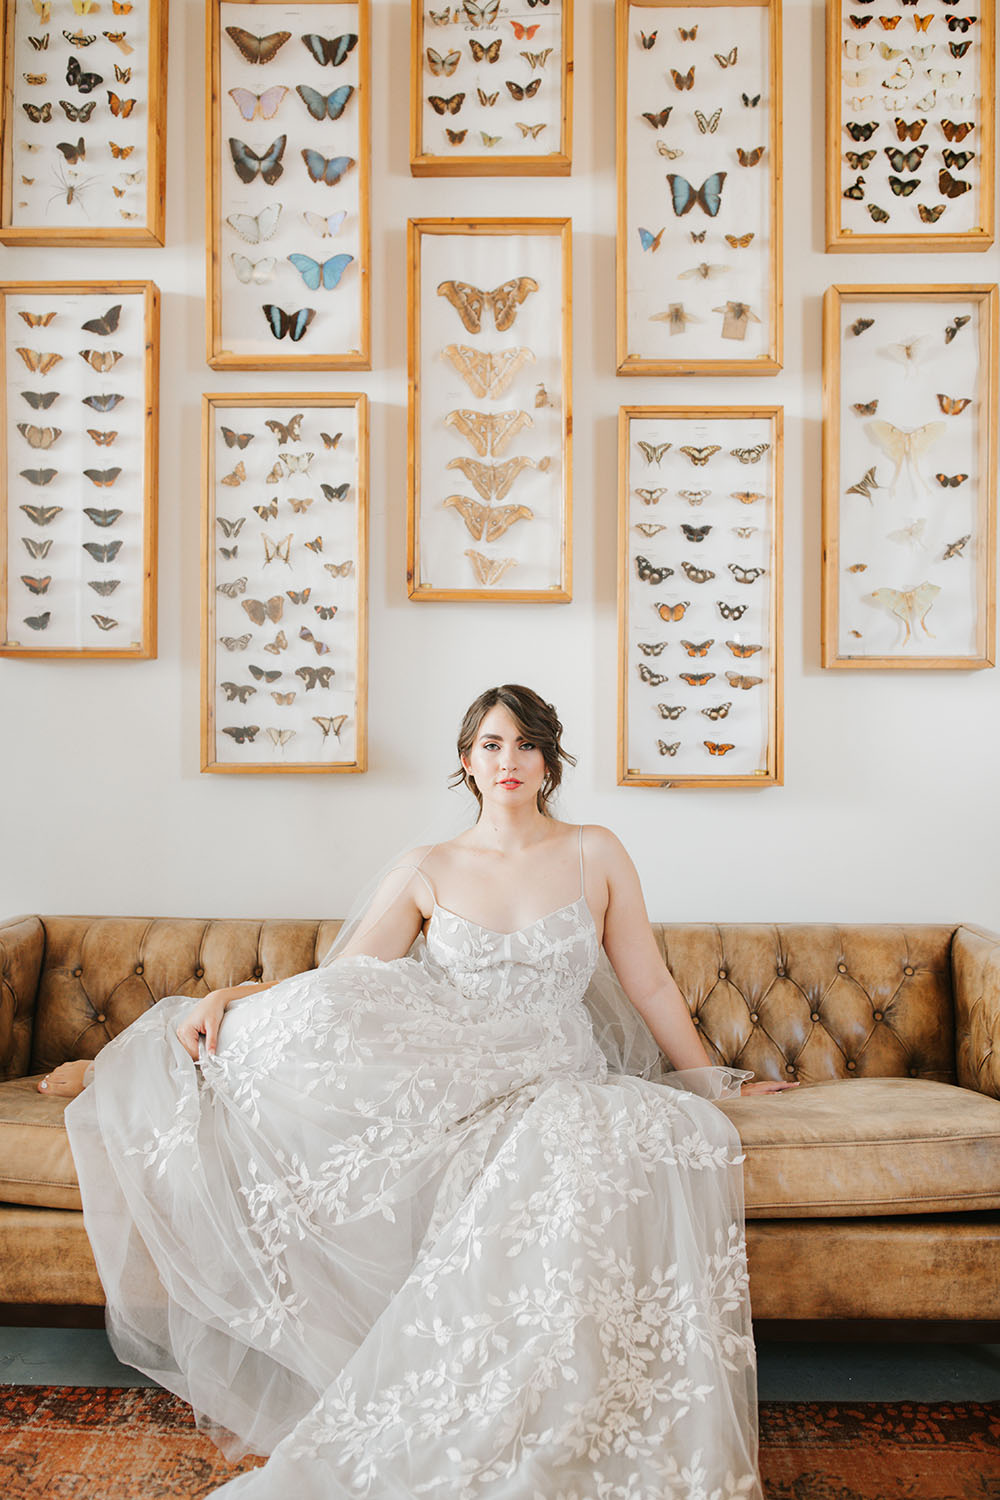 Moody Jewel Tone Wedding Butterfly Wall